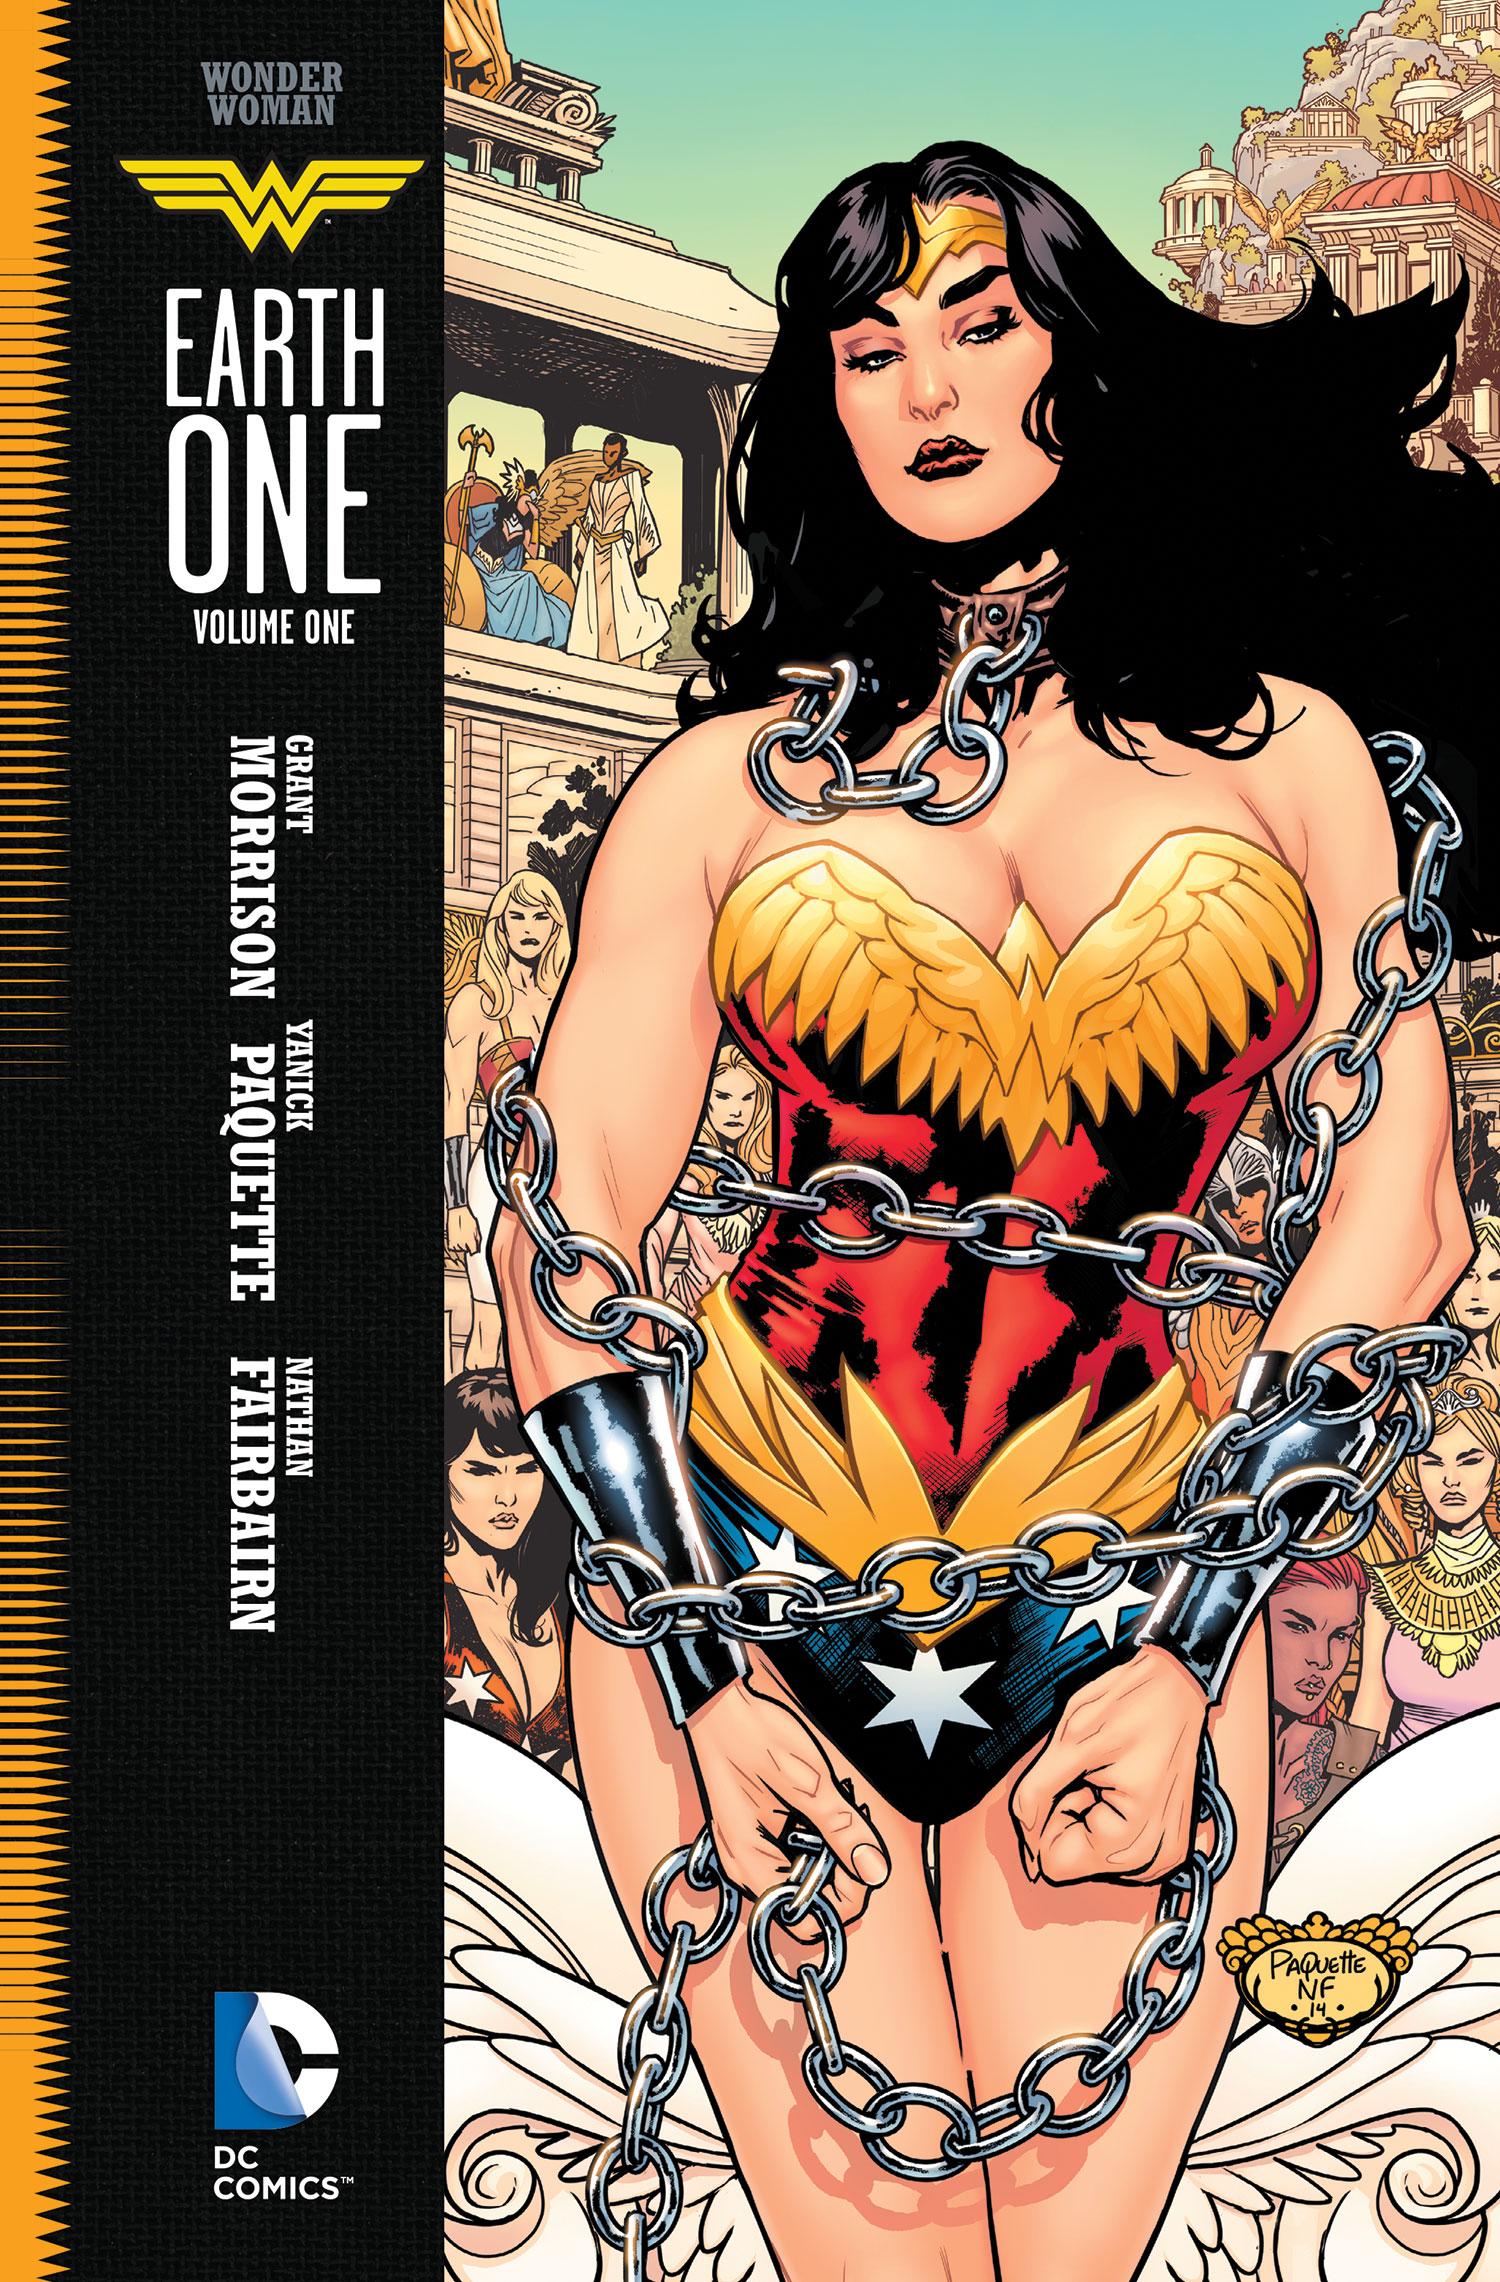 Wonder Woman: Earth One Vol. 1 #1